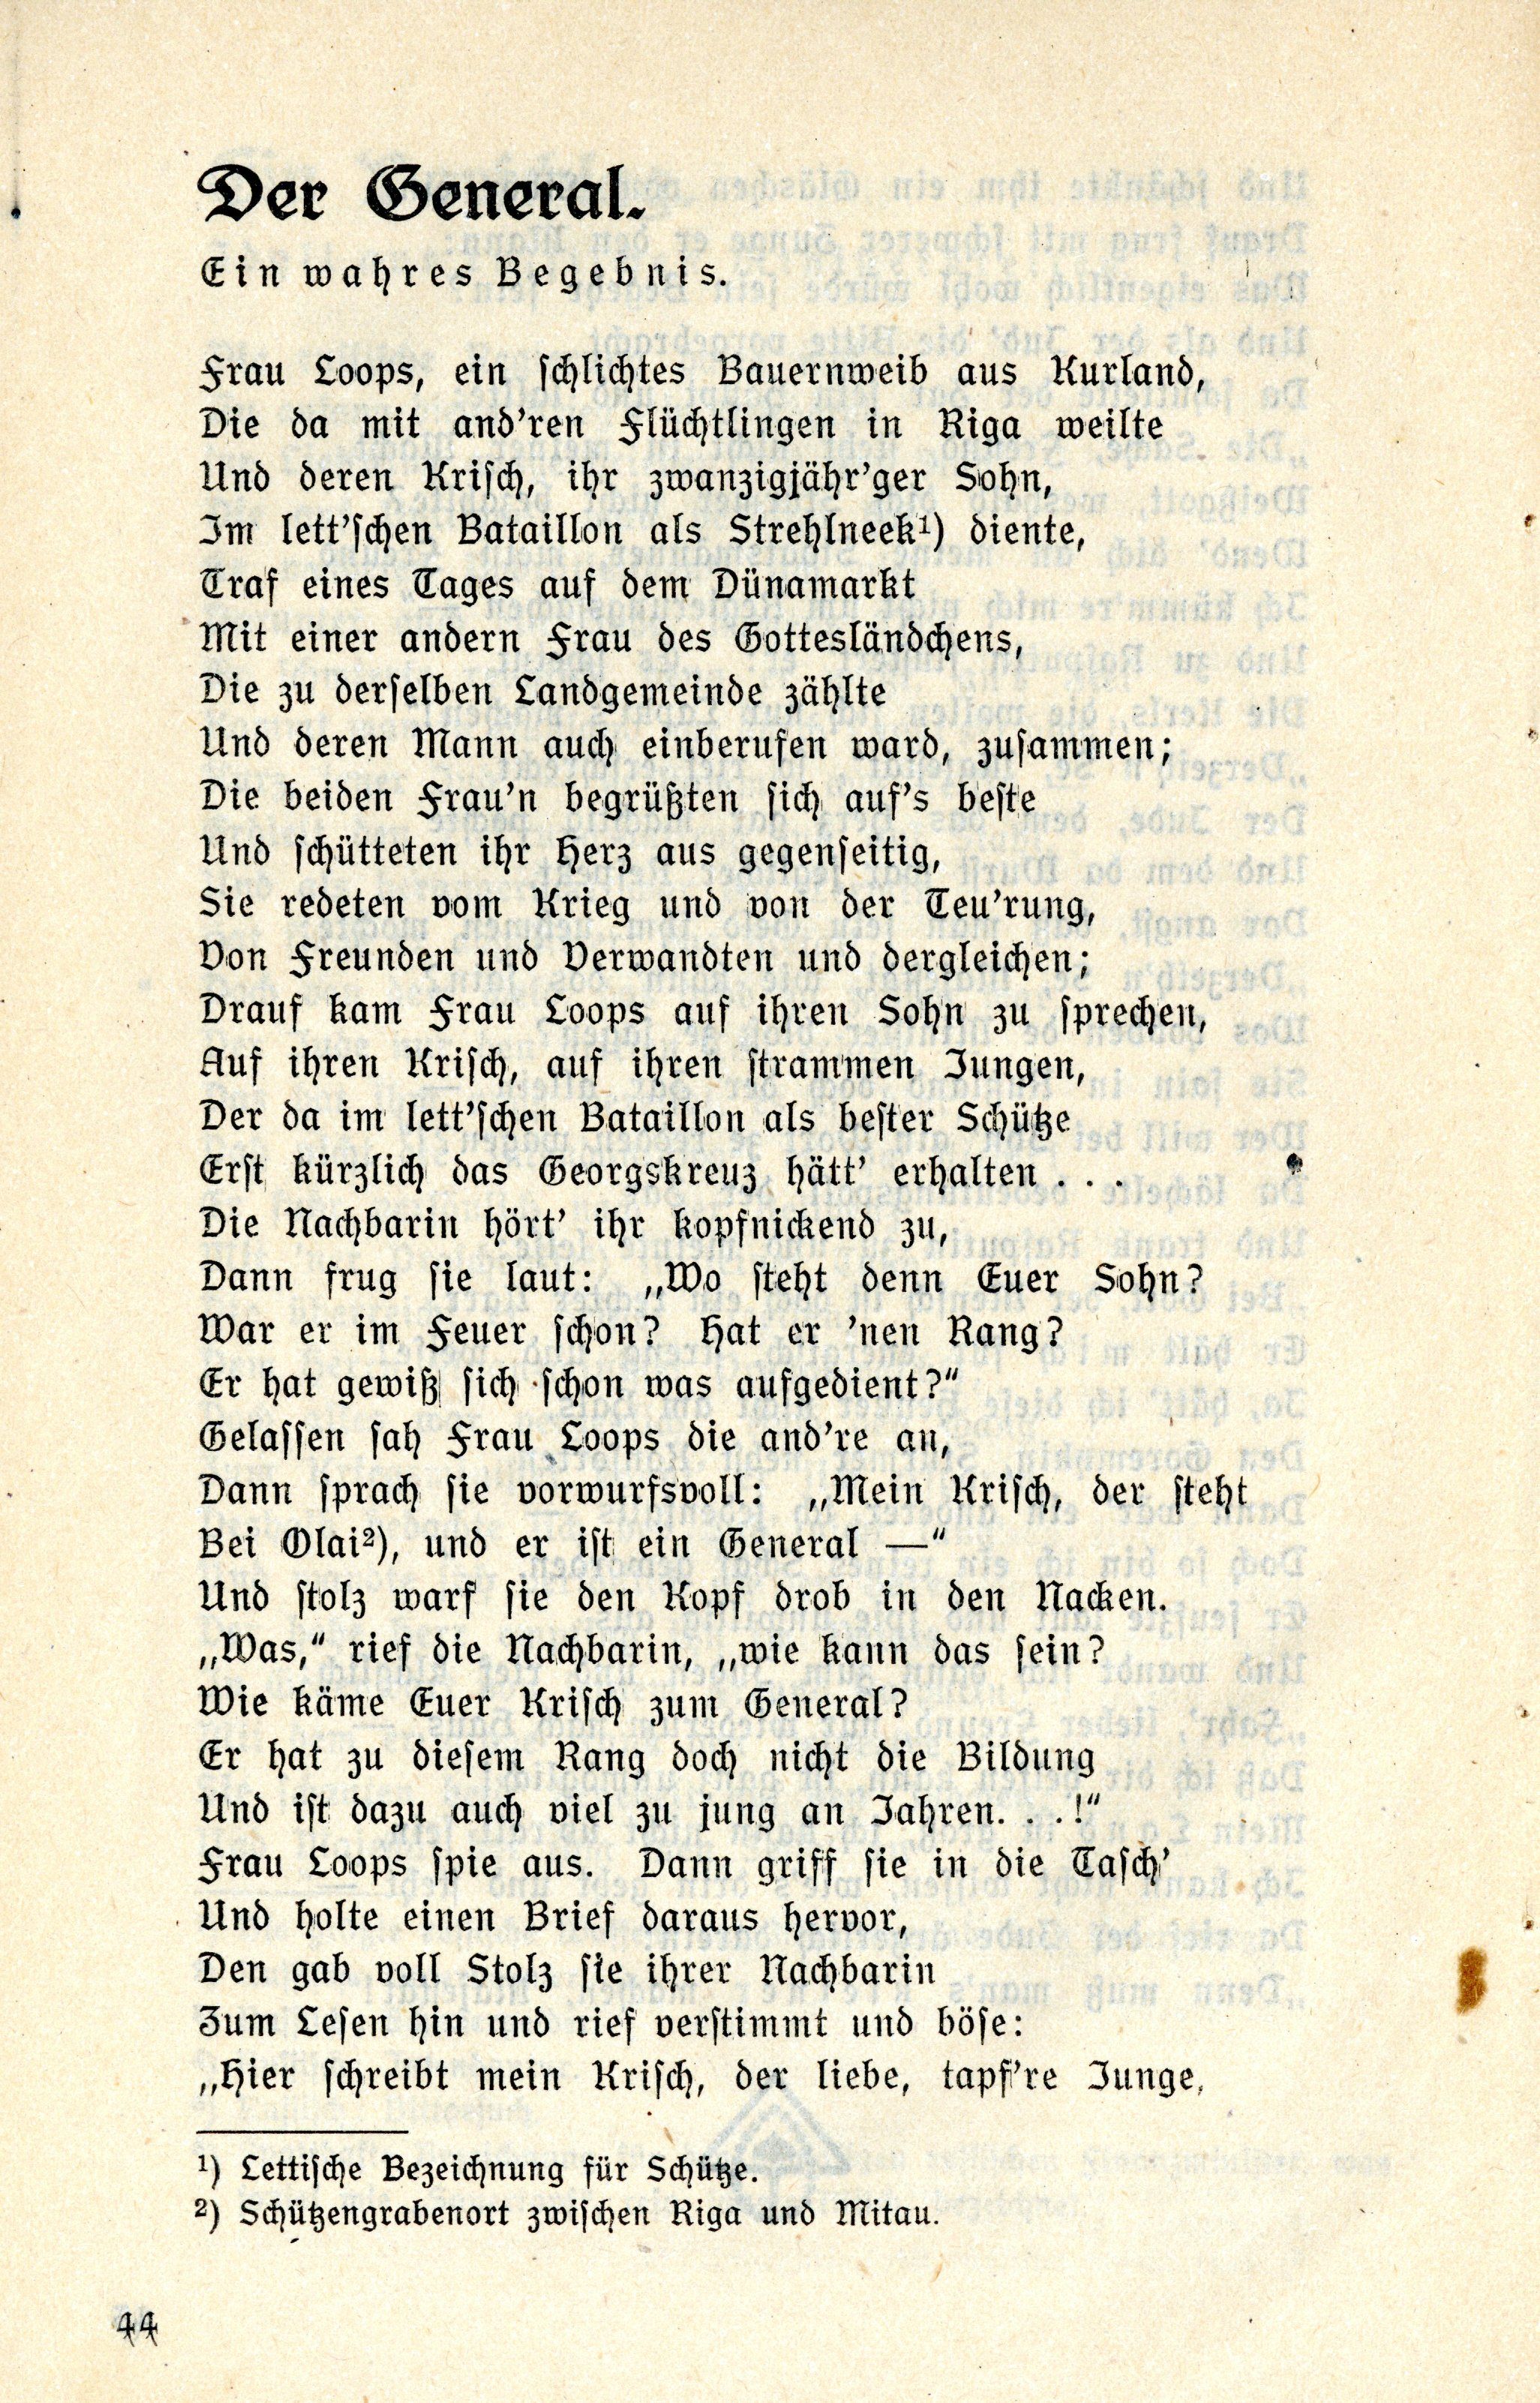 Der Balte im Maulkorb (1917) | 45. (44) Main body of text